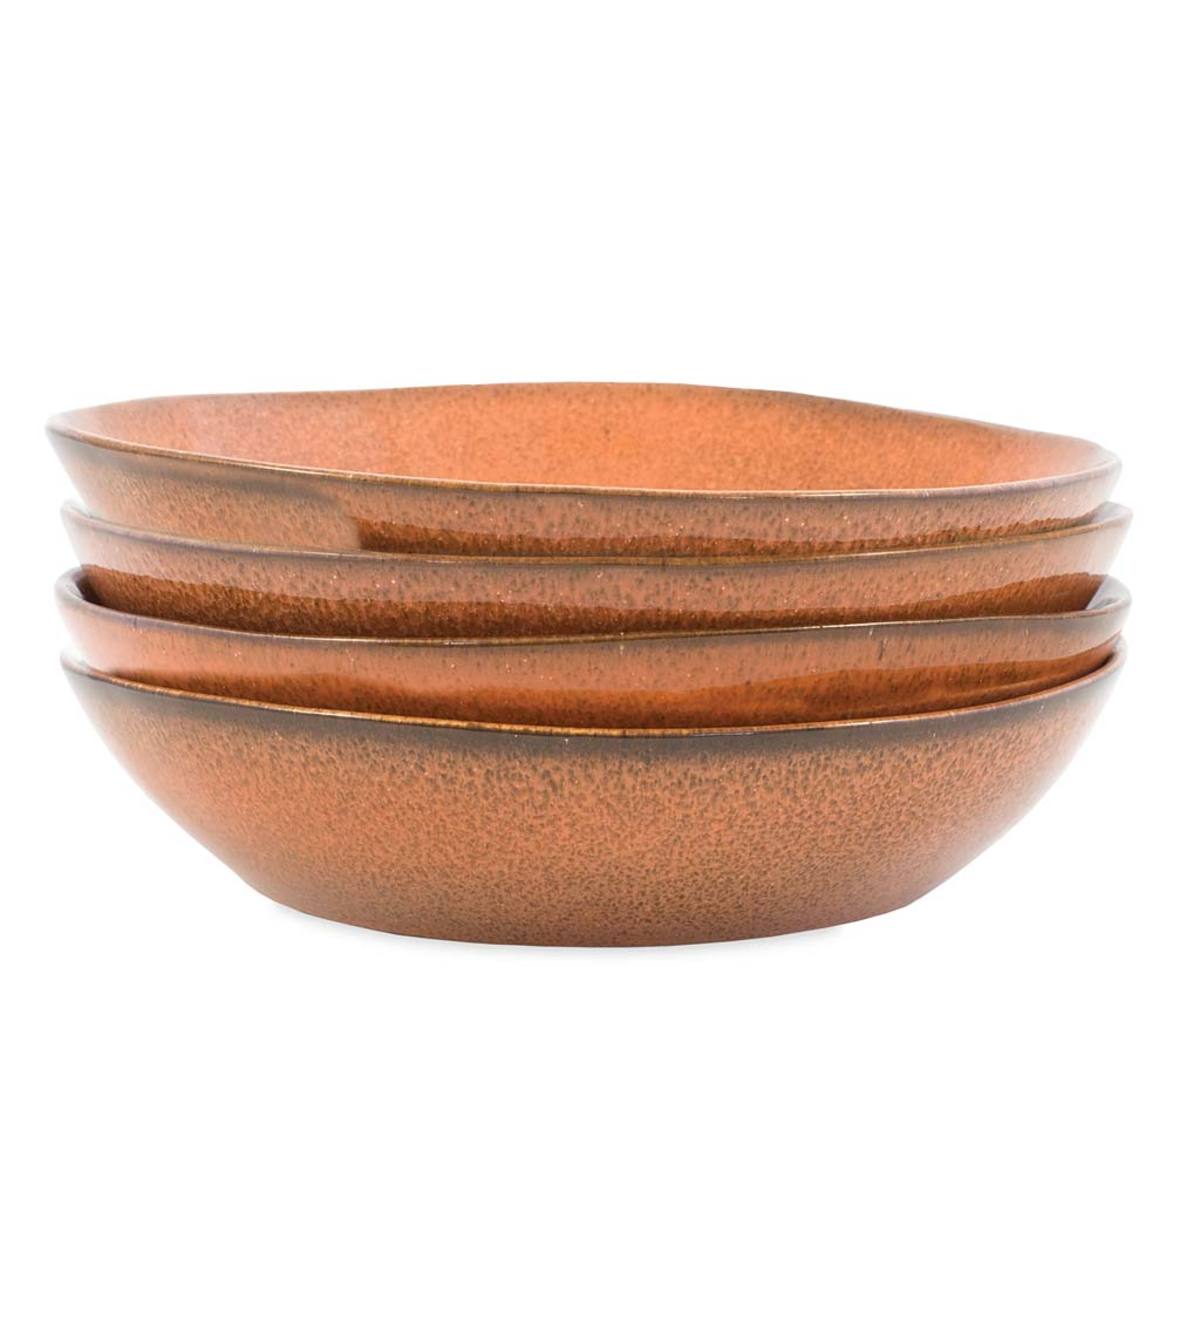 Farmstead Stoneware Pasta Bowls, Set of 4 - Terracotta